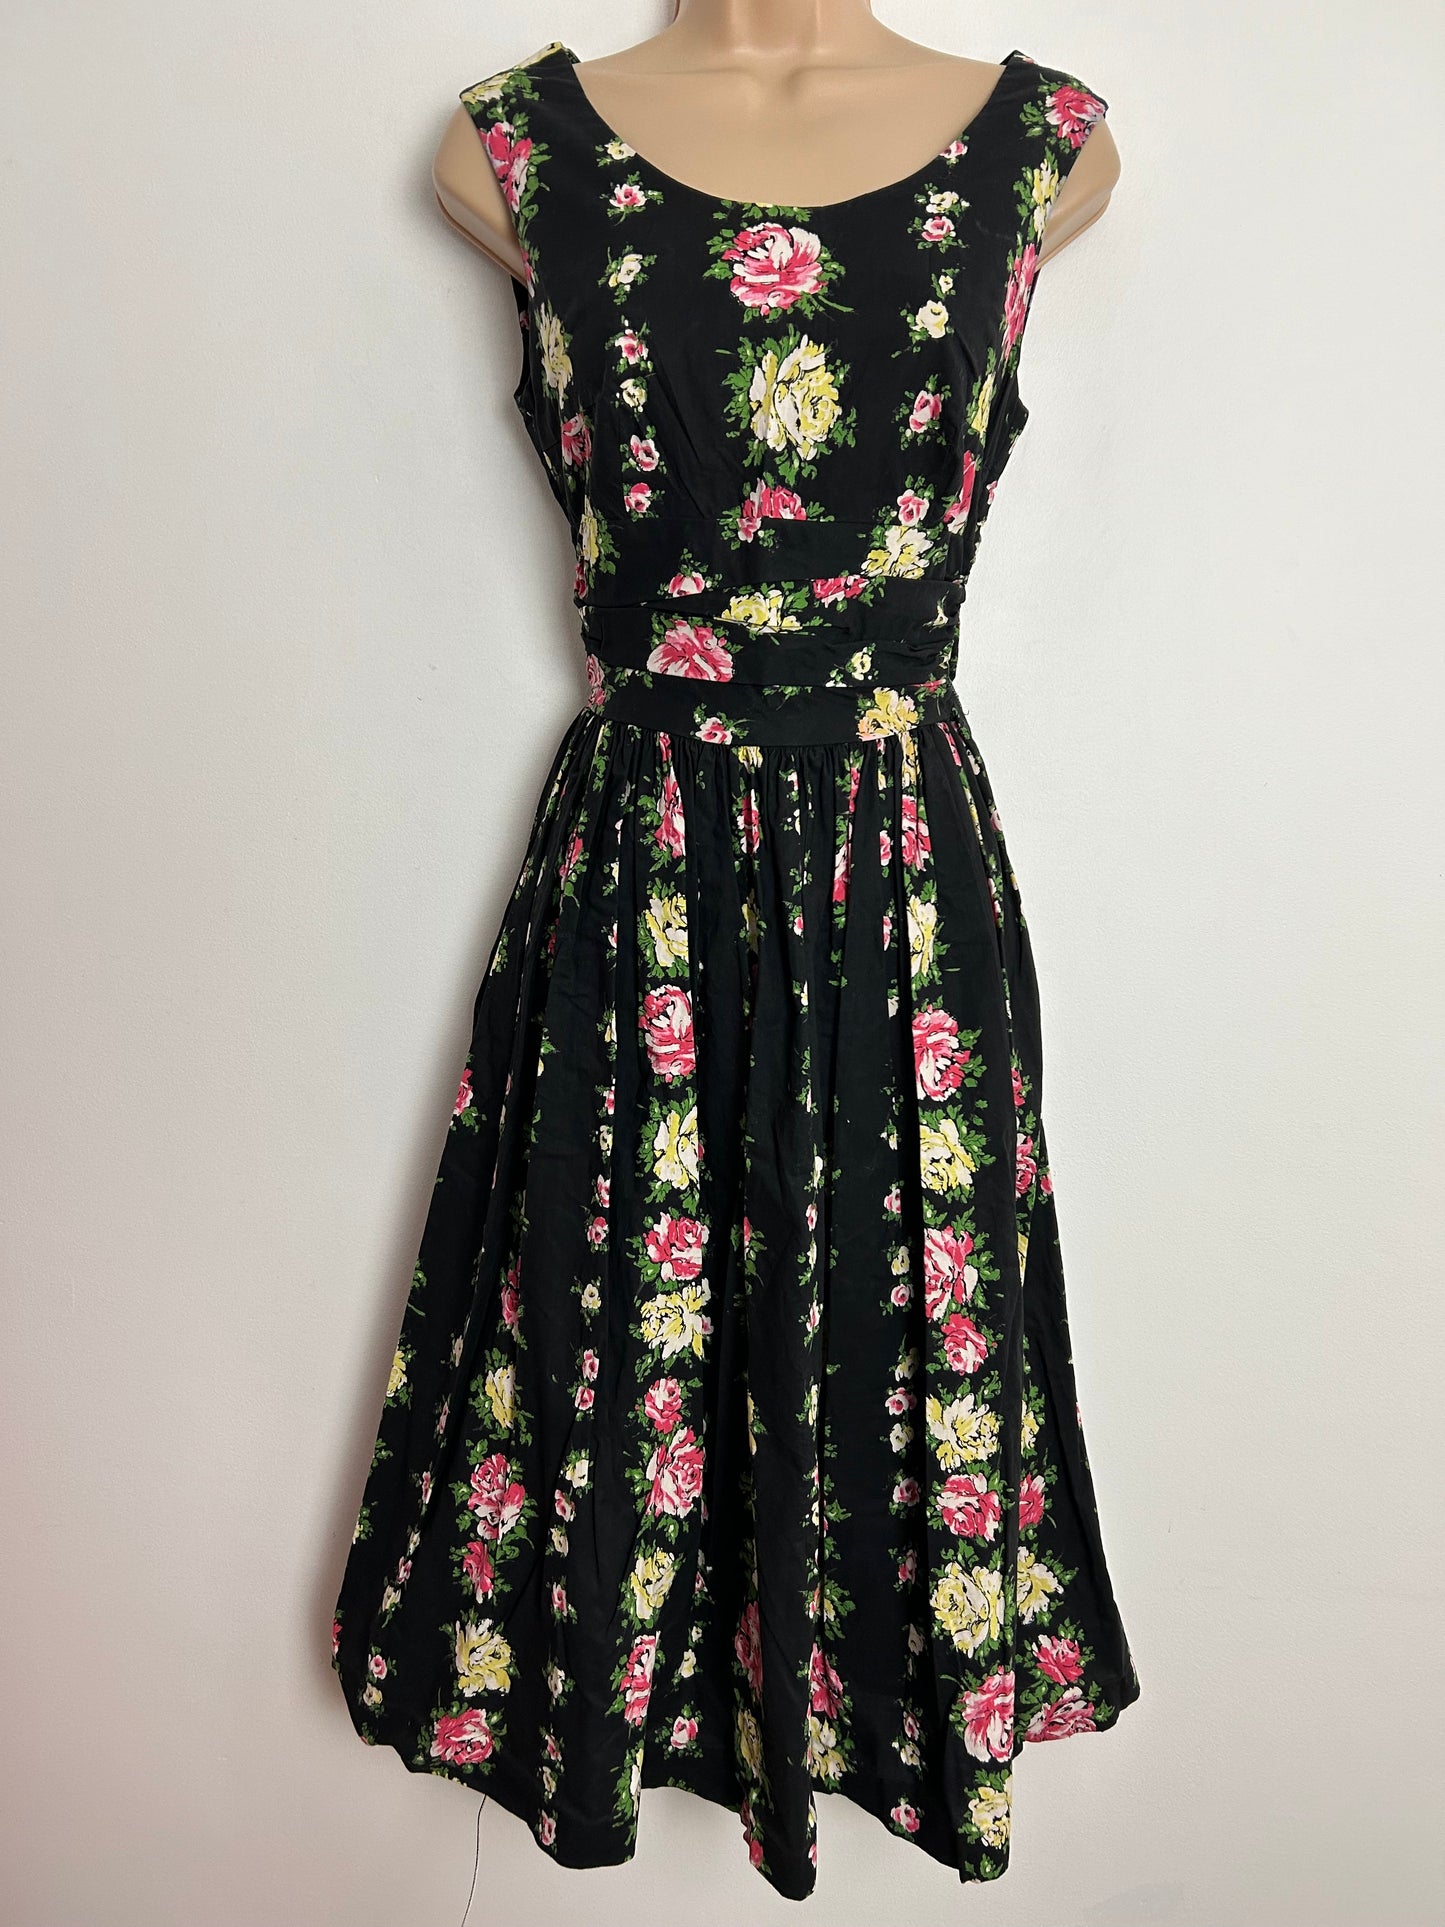 Vintage 1950s RARE SAMBO FASHIONS SAMUEL SHERMAN UK Size 6-8 Black Pink & Lemon Floral Print Cotton Pleated Dress